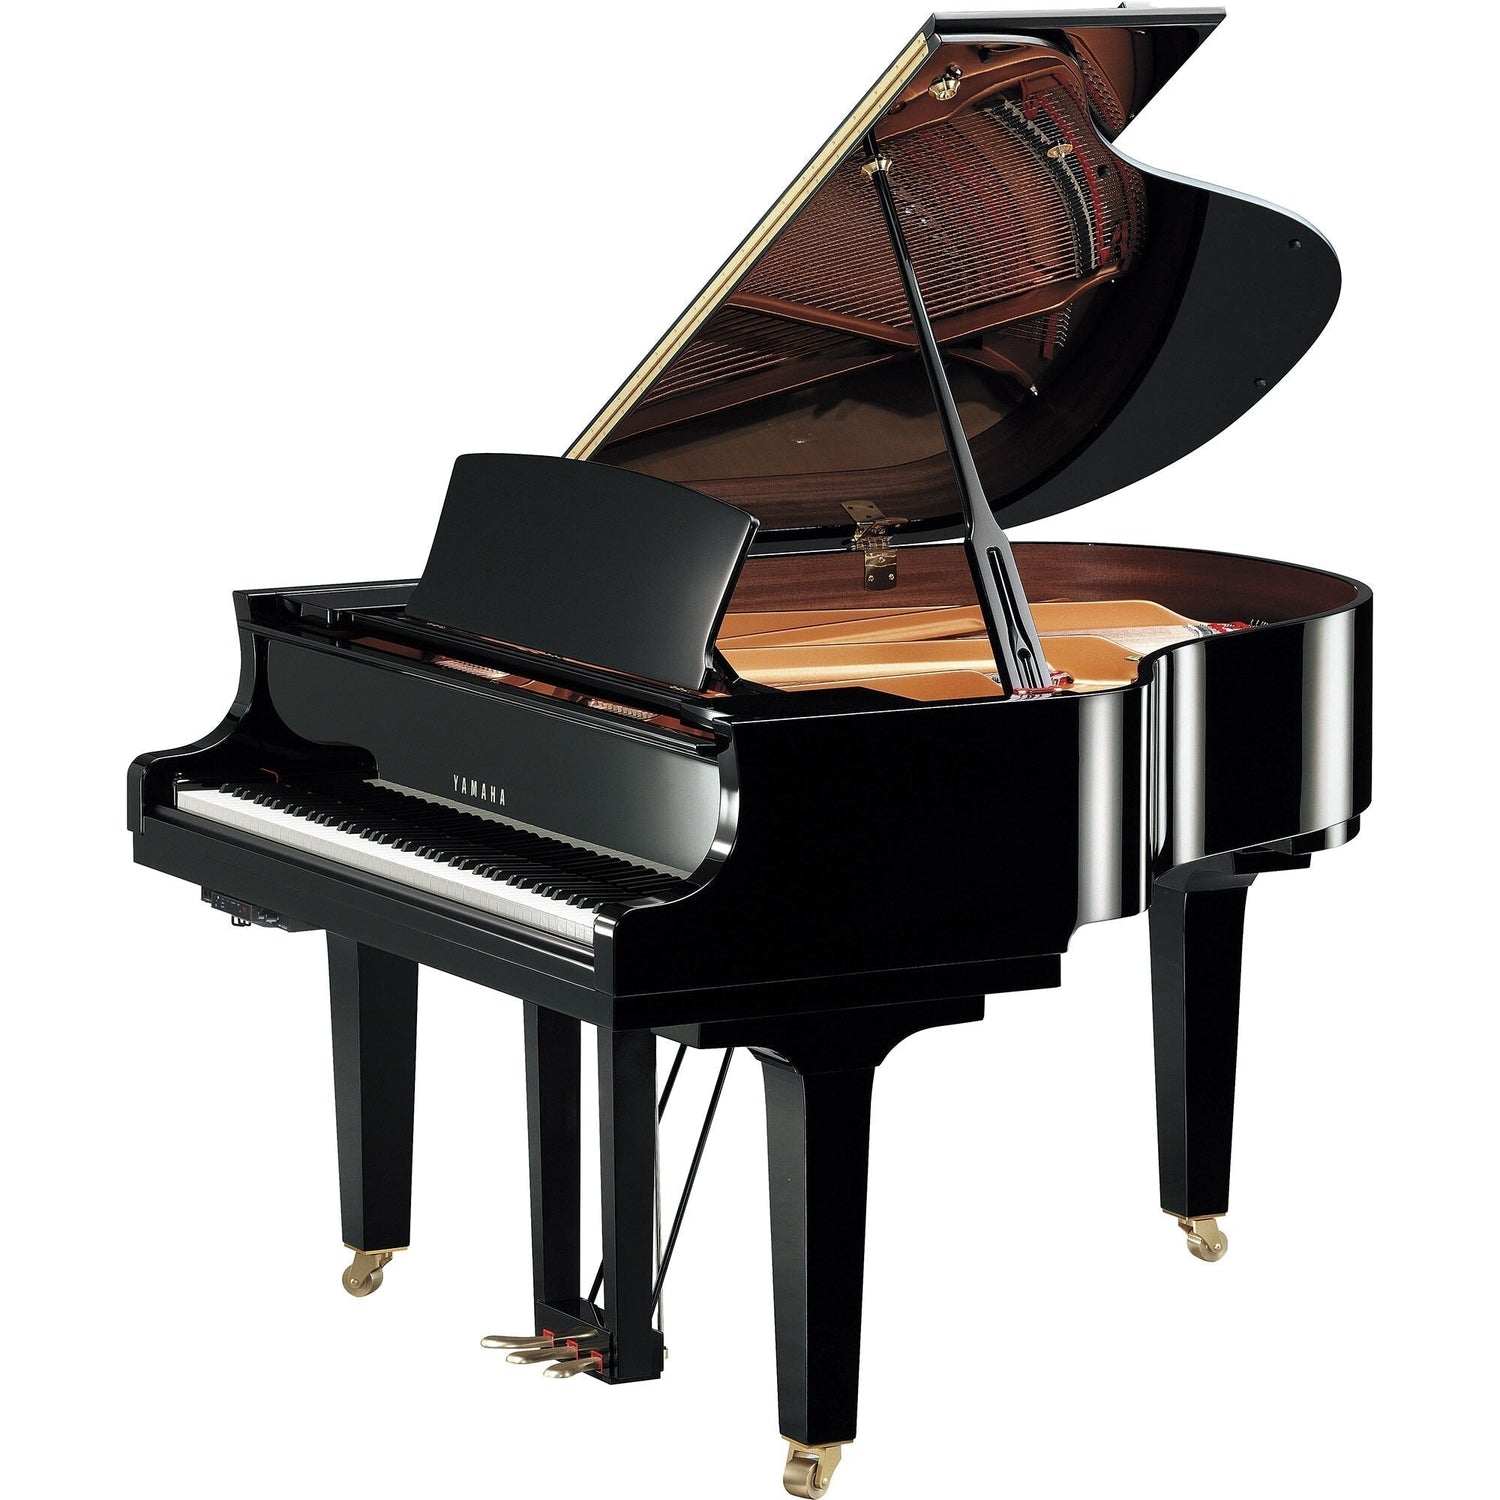 Yamaha TransAcoustic Series Hybrid Pianos